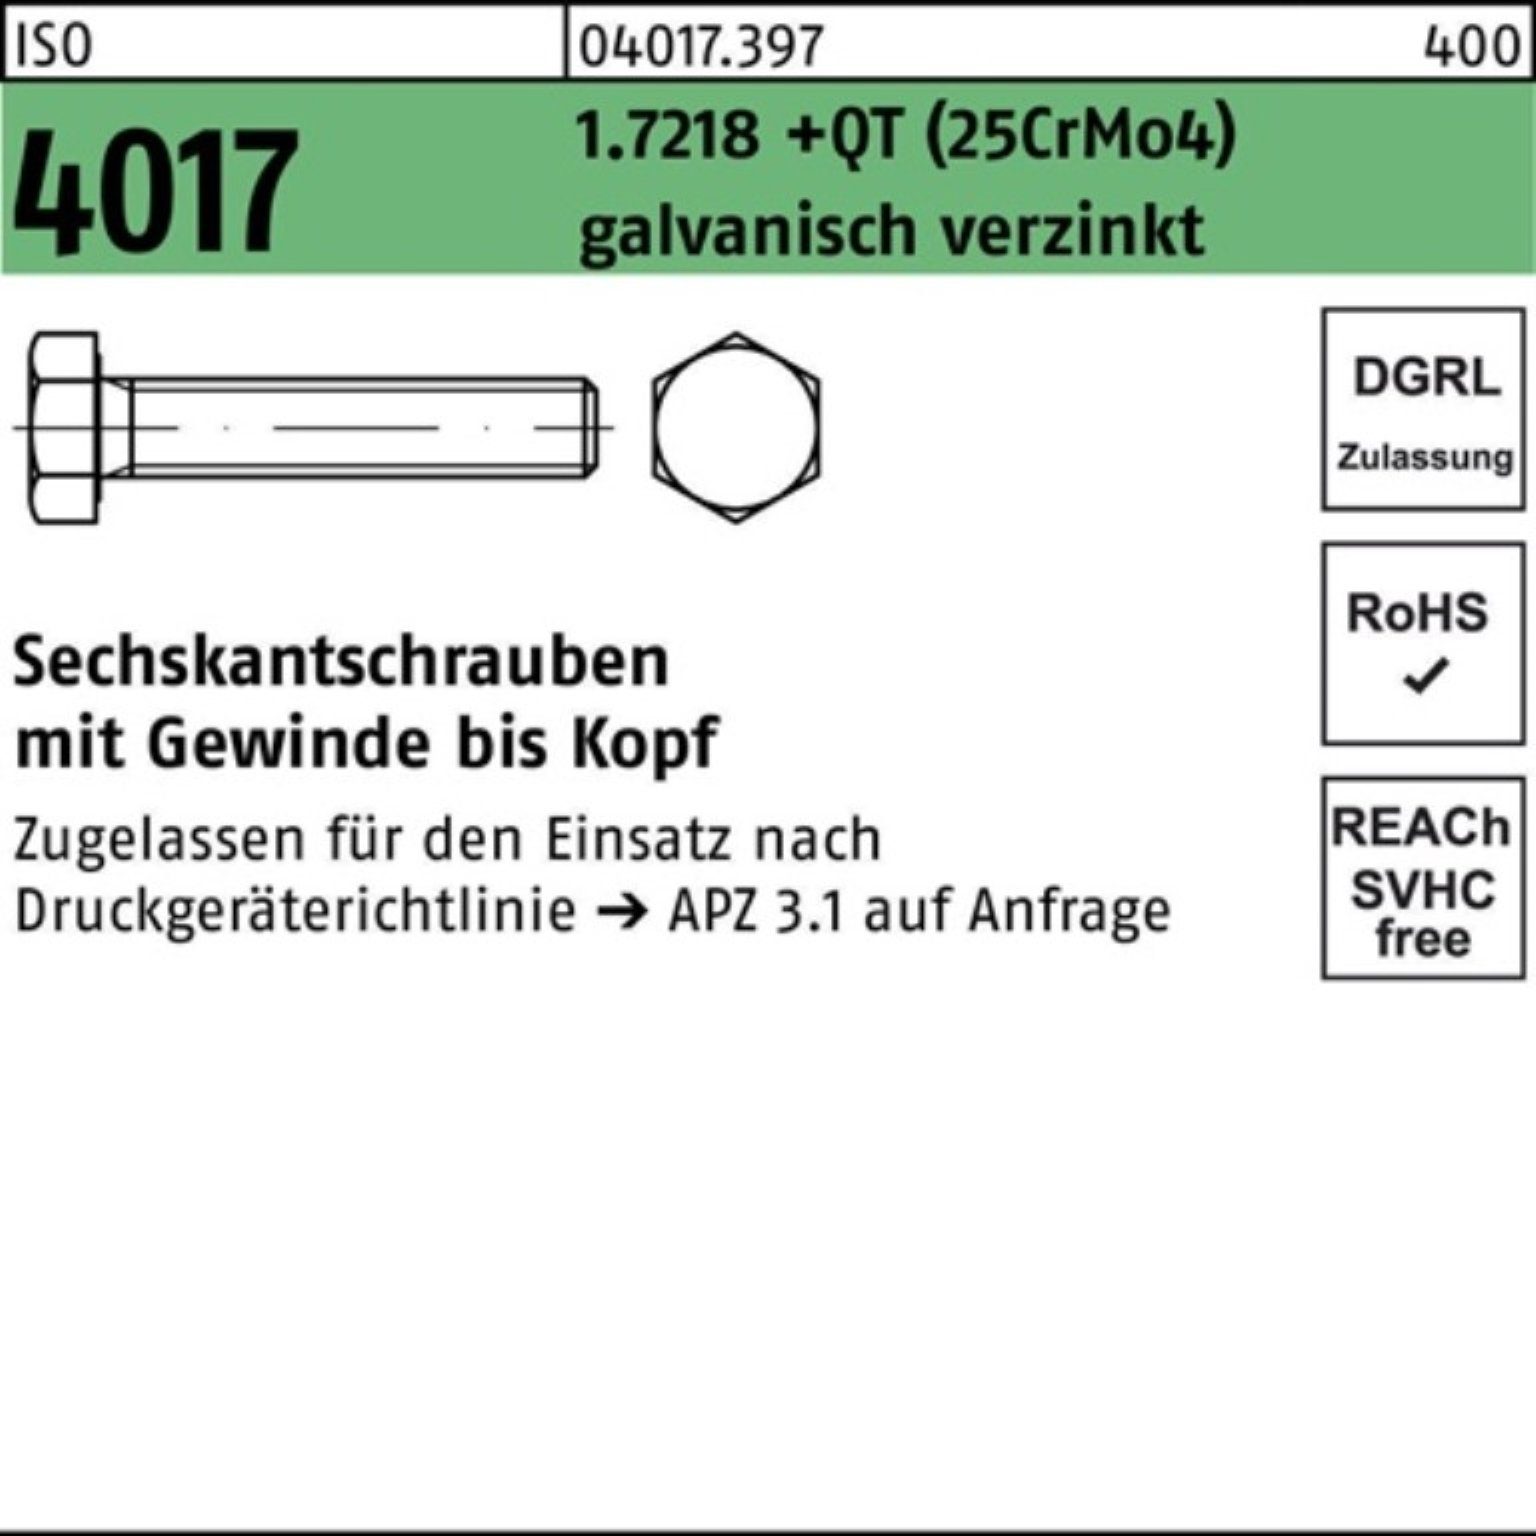 Bufab Sechskantschraube 100er Pack Sechskantschraube 1.7218 4017 M30x120 +QT ISO VG (25CrMo4)